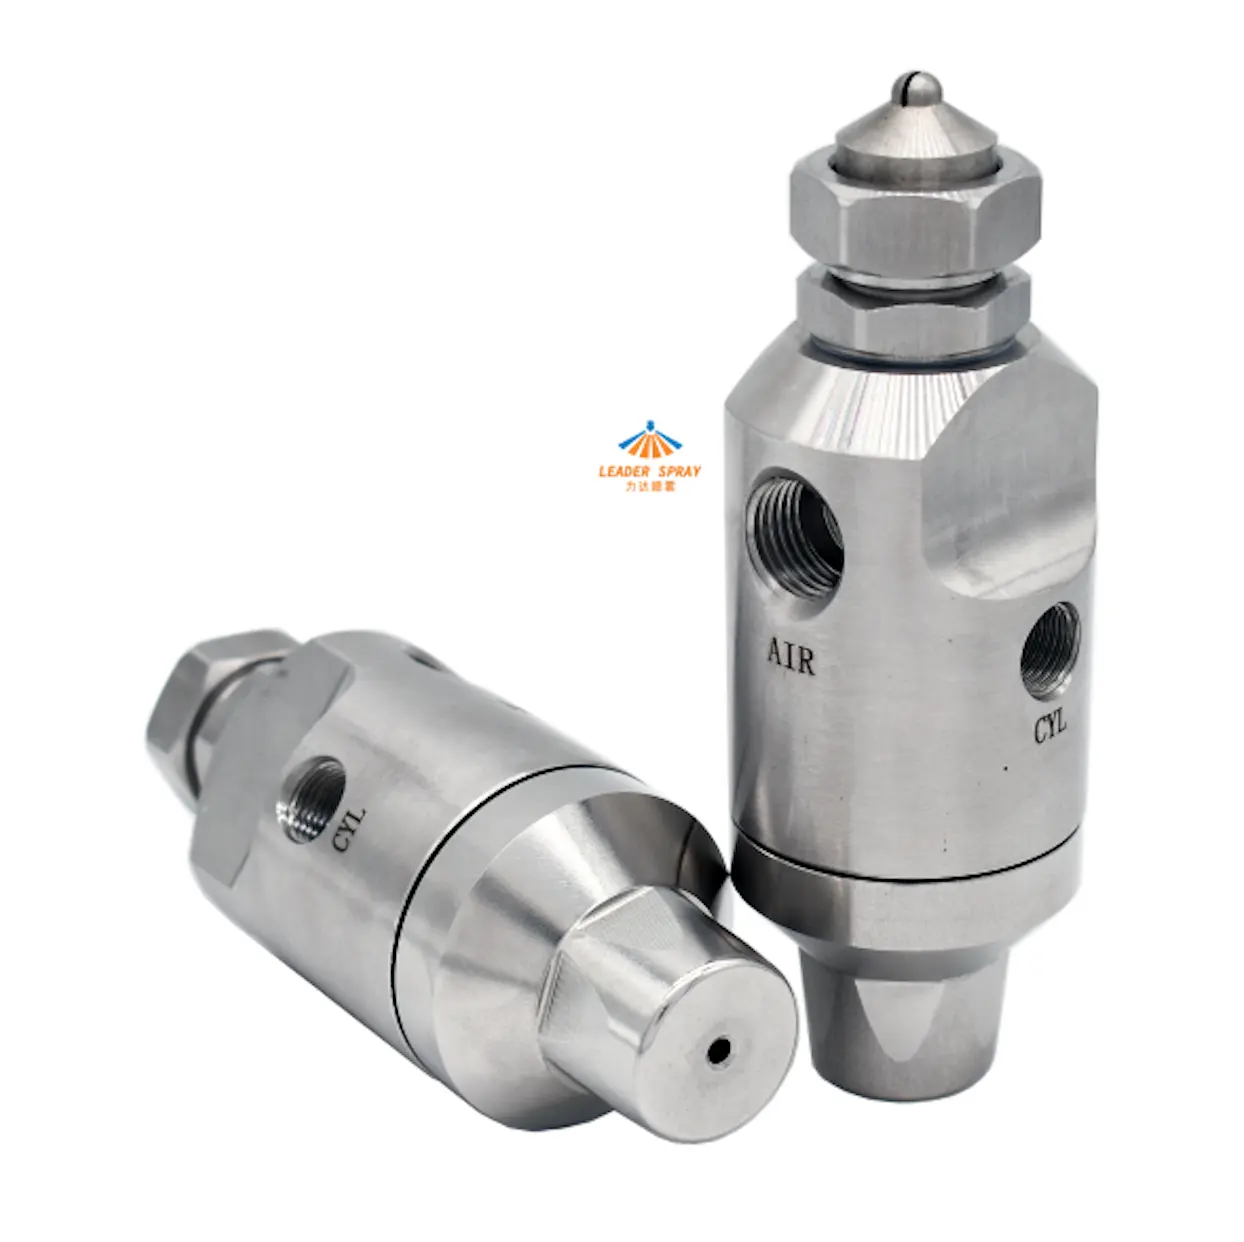 Stainless steel/SS/PP/POM/Plastic three-fluid JAU/DJ Non-adjustable air atomizing nozzle